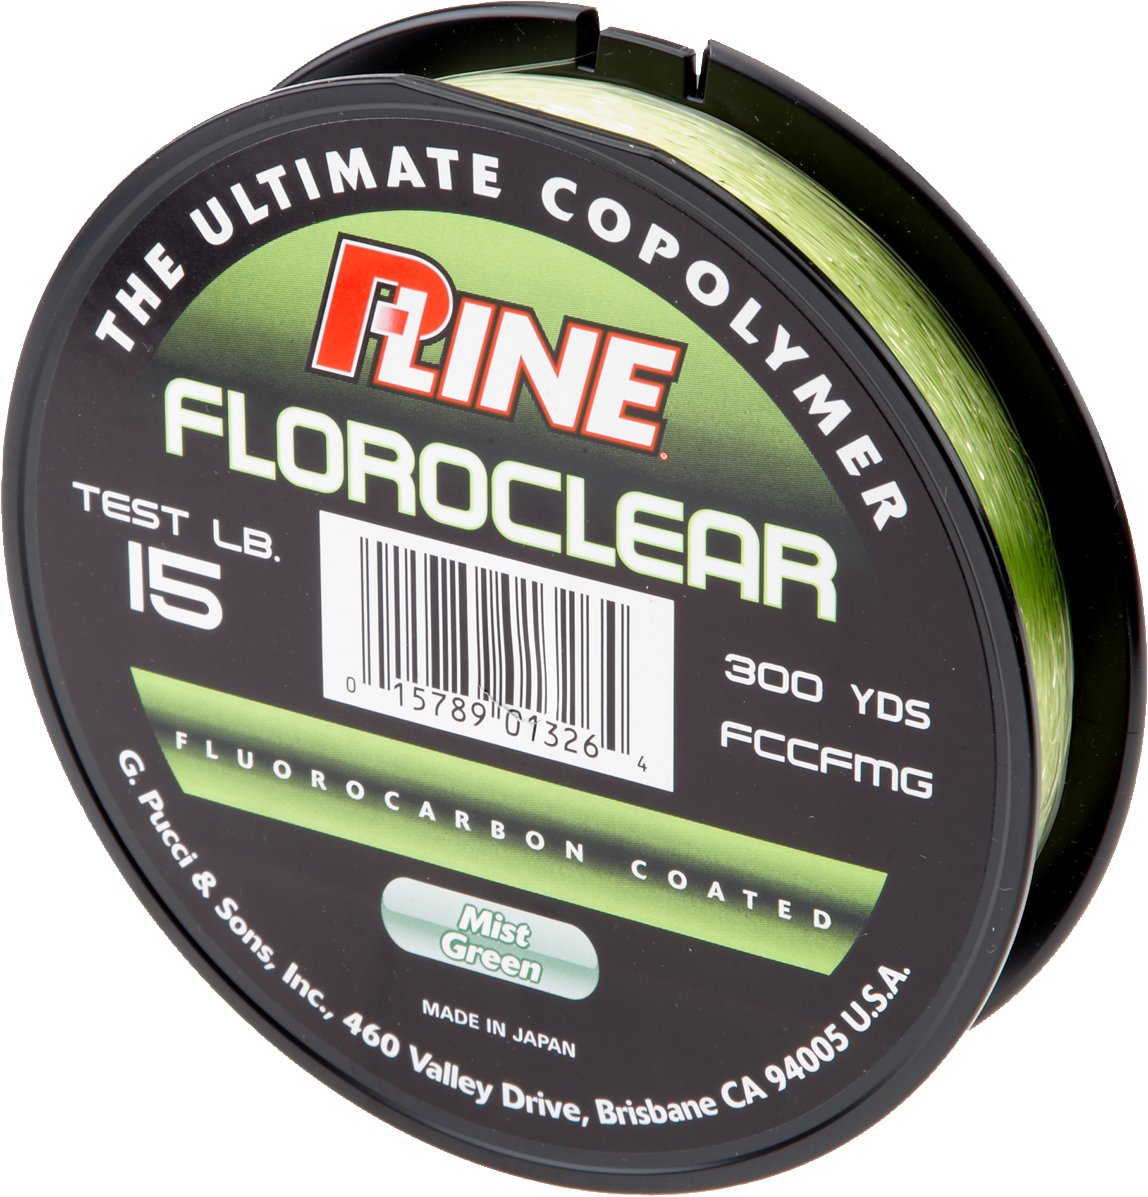 P-Line® Floroclear 15 lb. - 300 yards Fluorocarbon Fishing Line